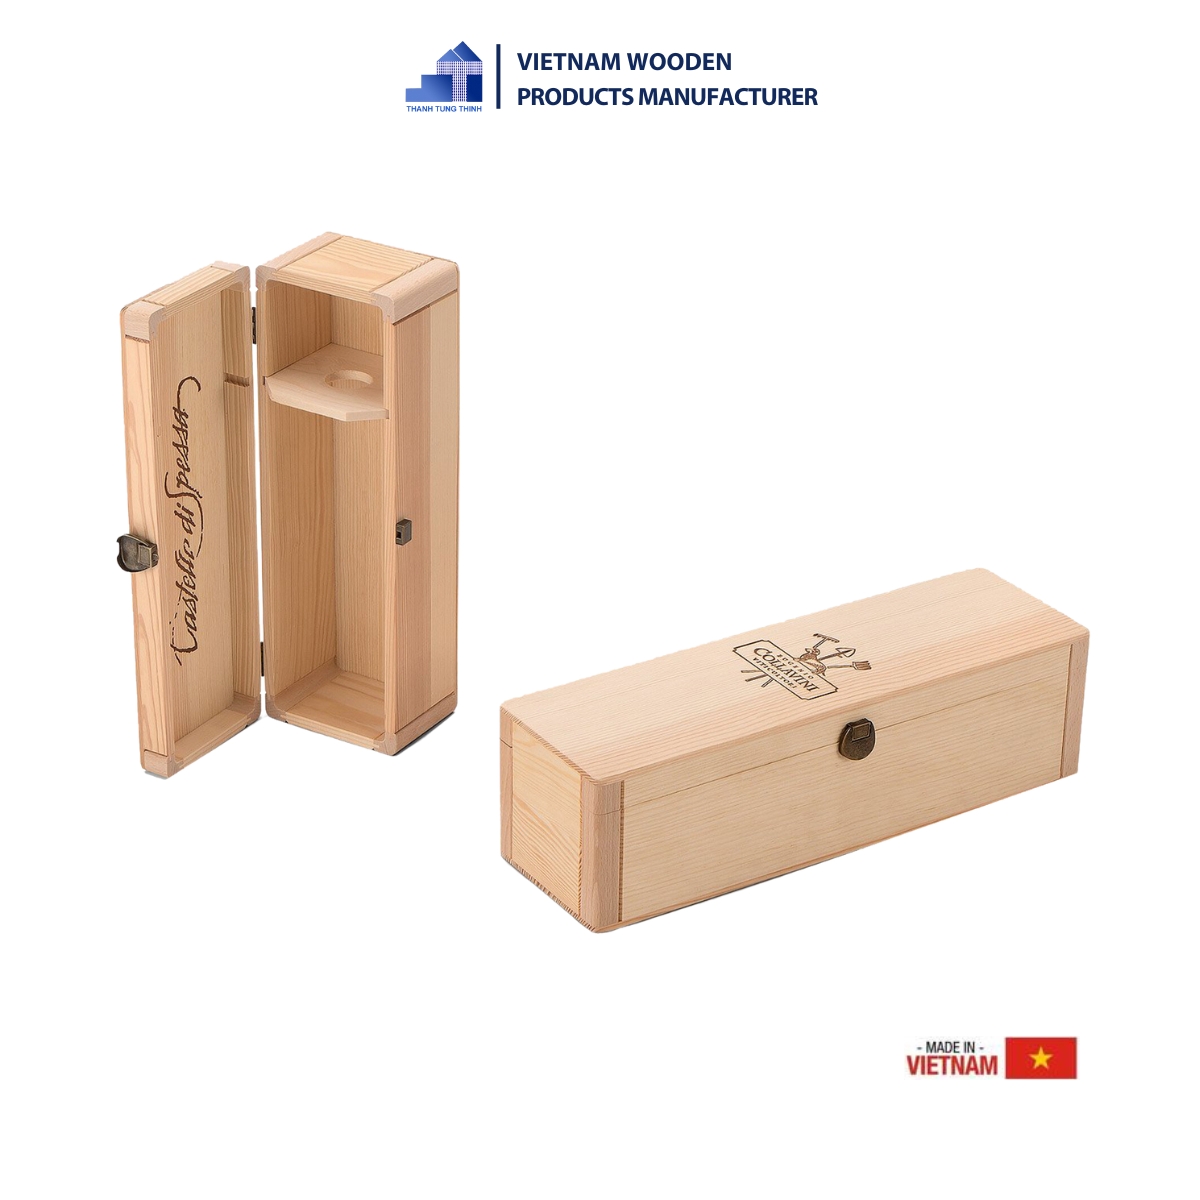 Basic Singlebottle Wooden Wine Box with Snapon Lid Design [WB001]